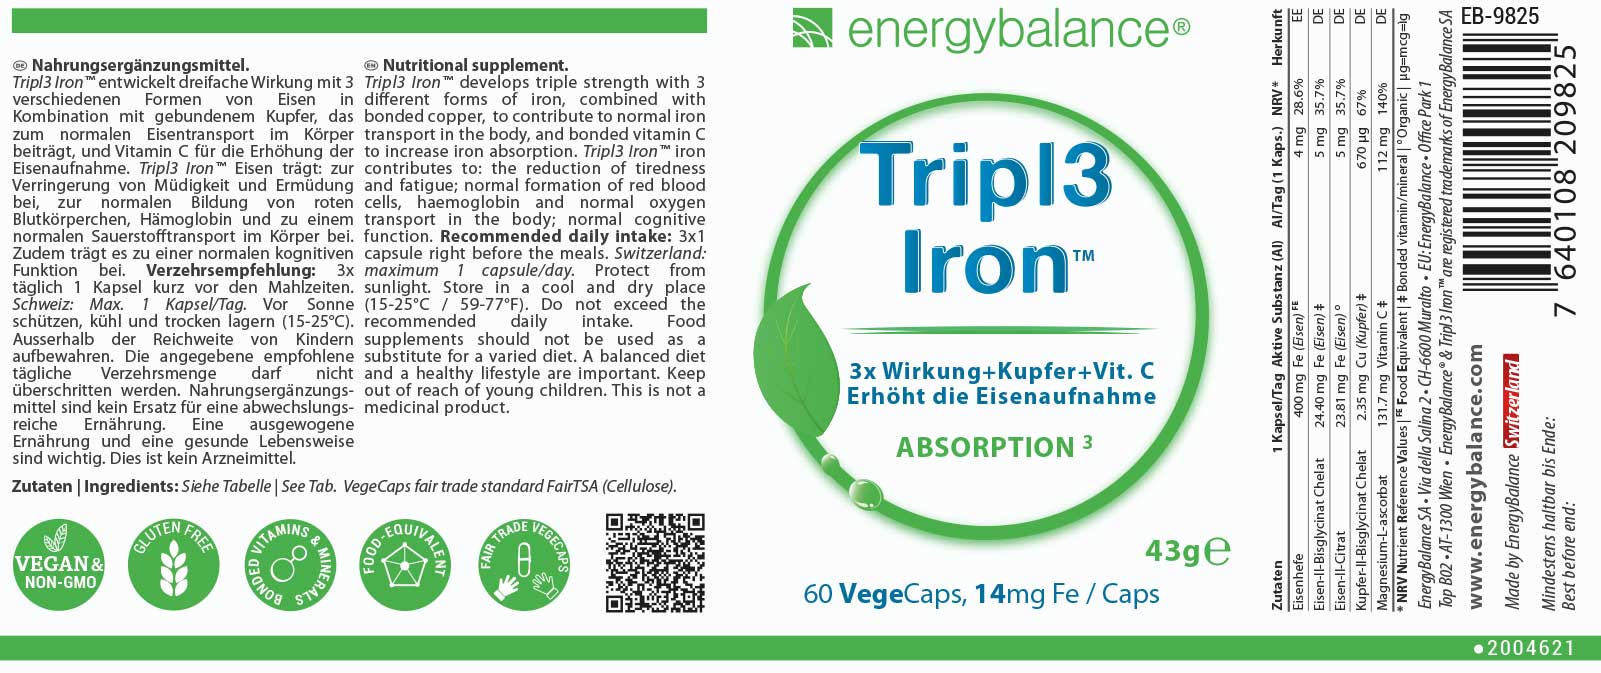 Tripl3 Iron Etikett von Energybalance